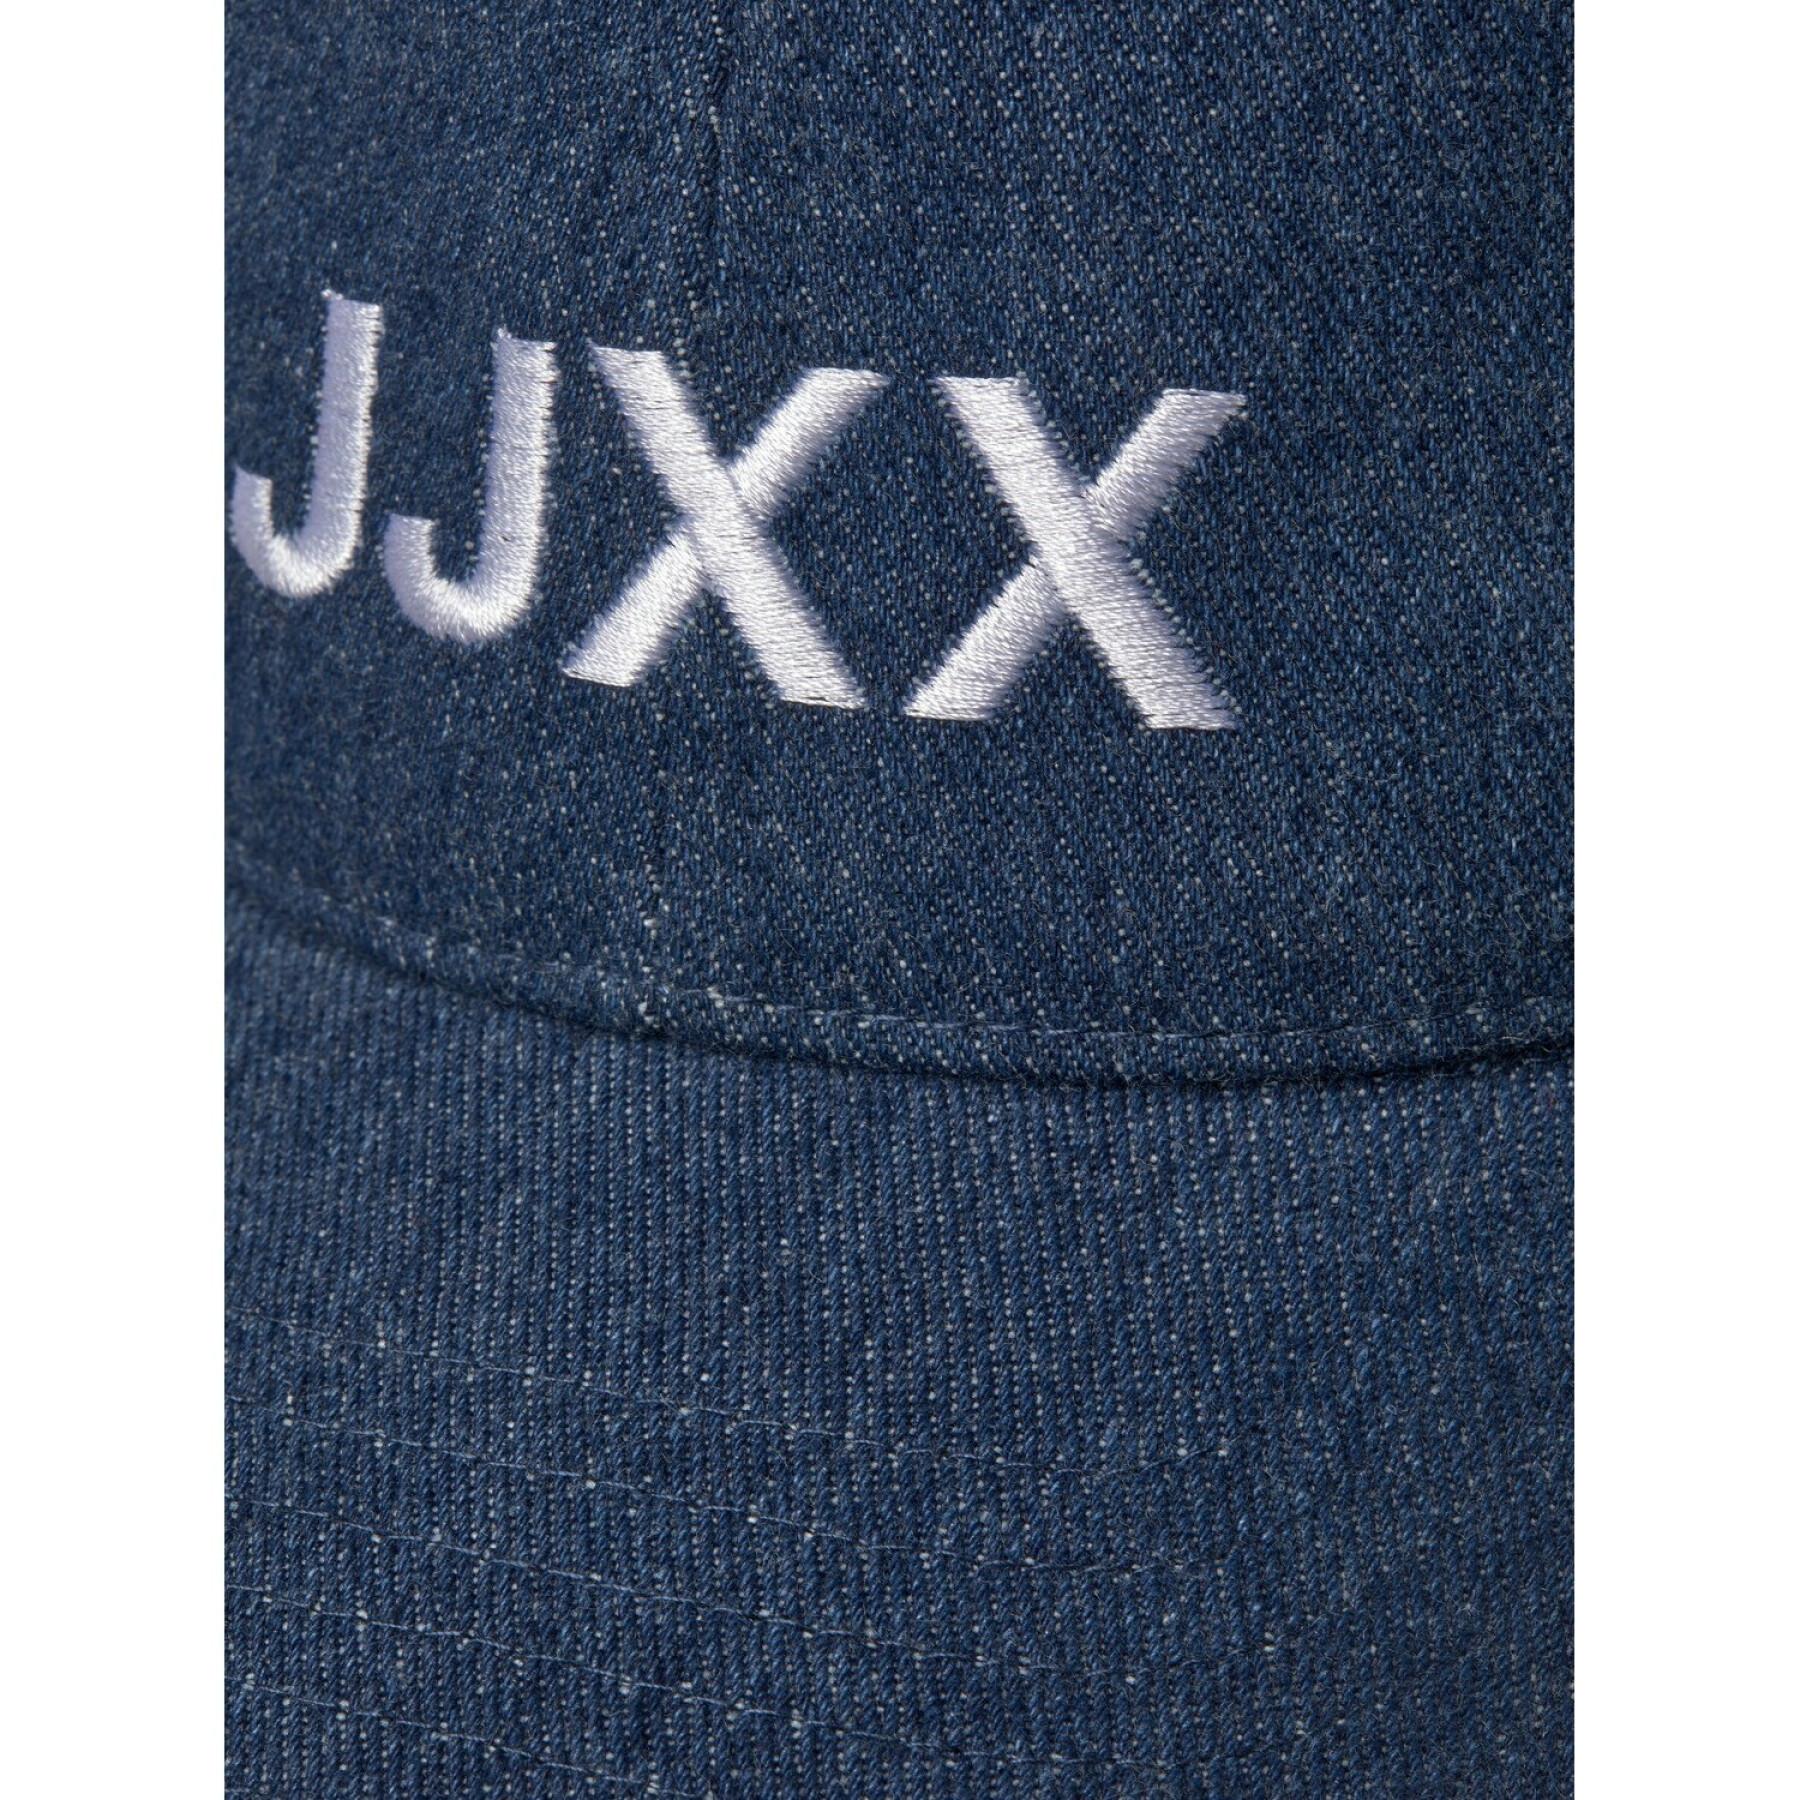 Damespet JJXX basic big logo denim